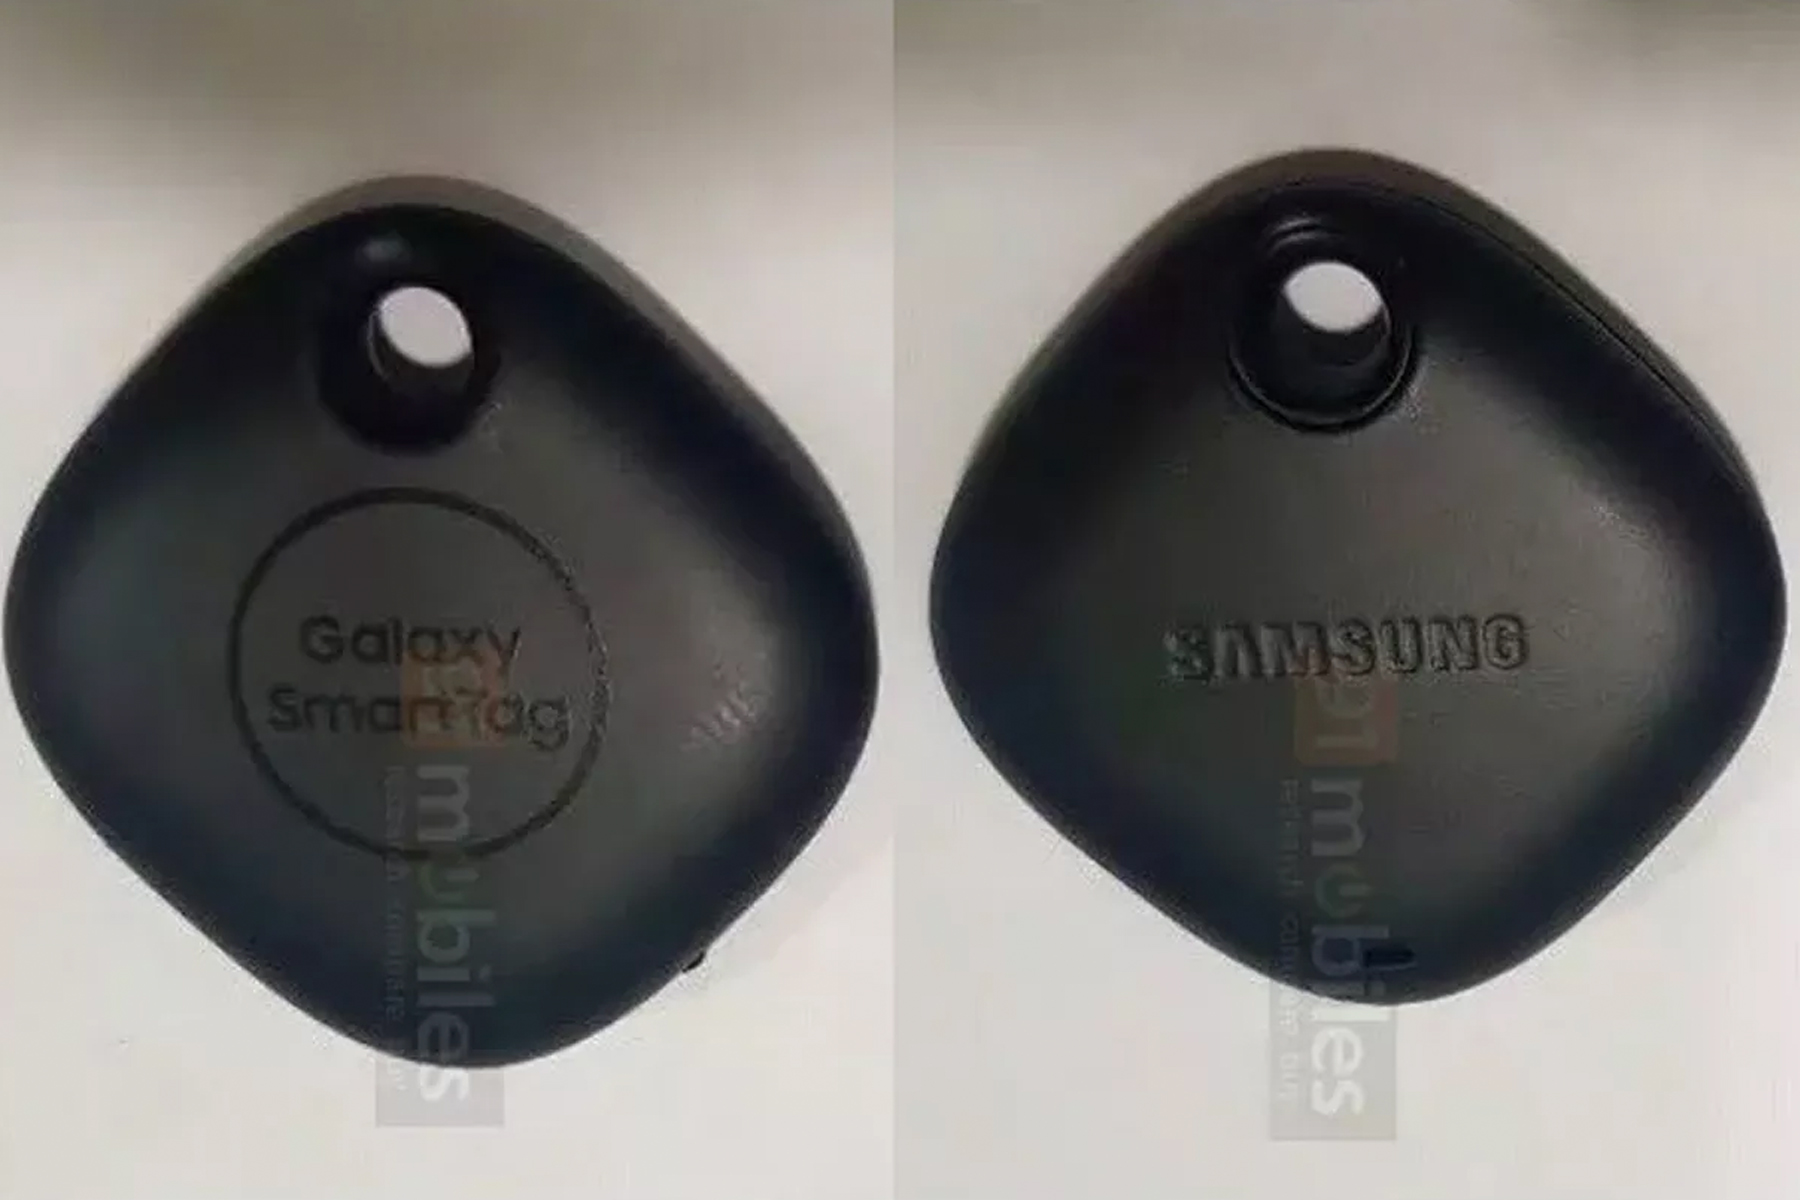 Samsung 全新物品定位装置「Galaxy SmartTag」曝光